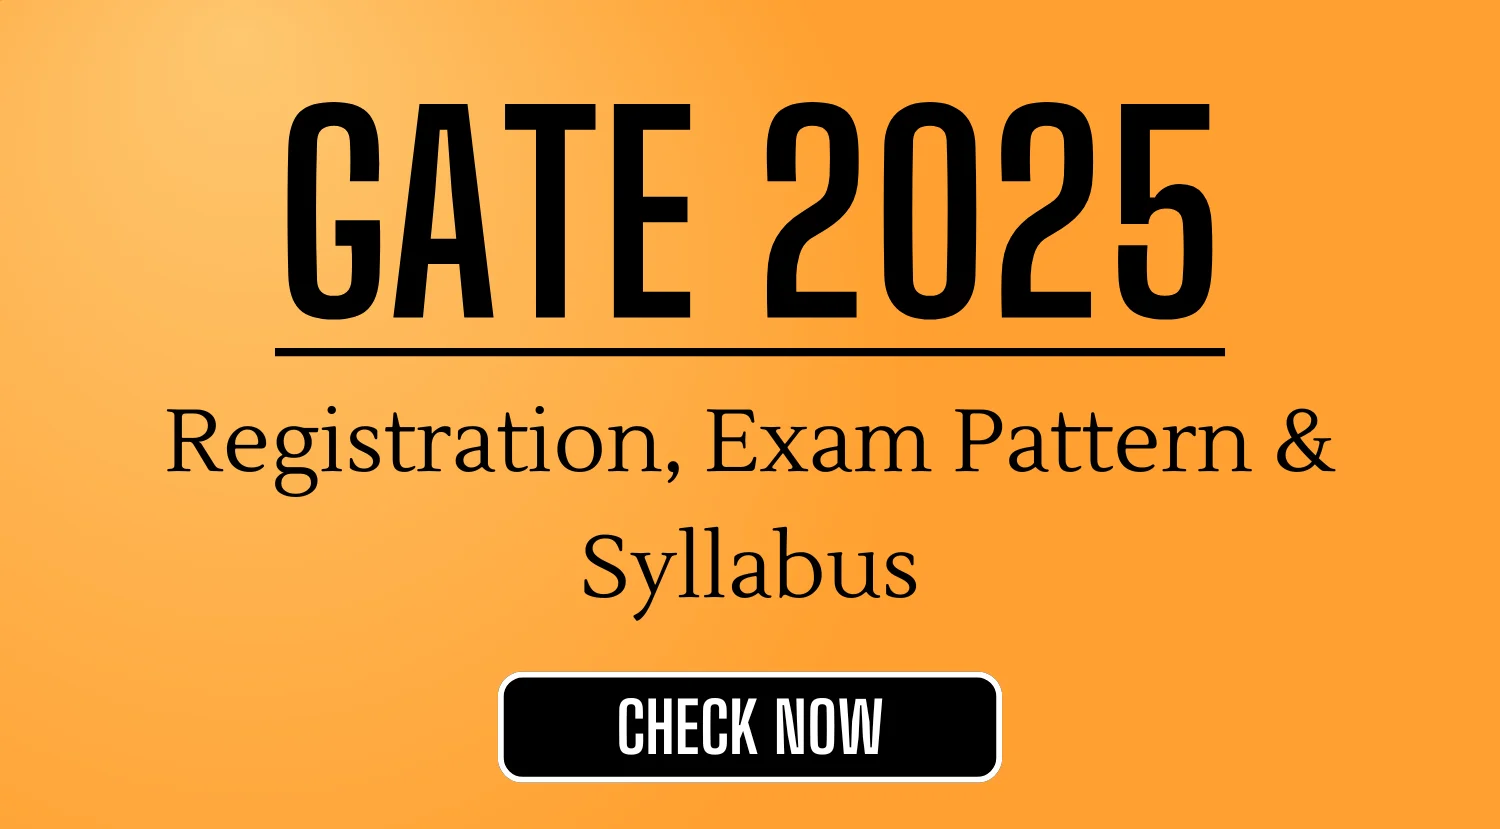 GATE 2025 Registration Exam Pattern Syllabus